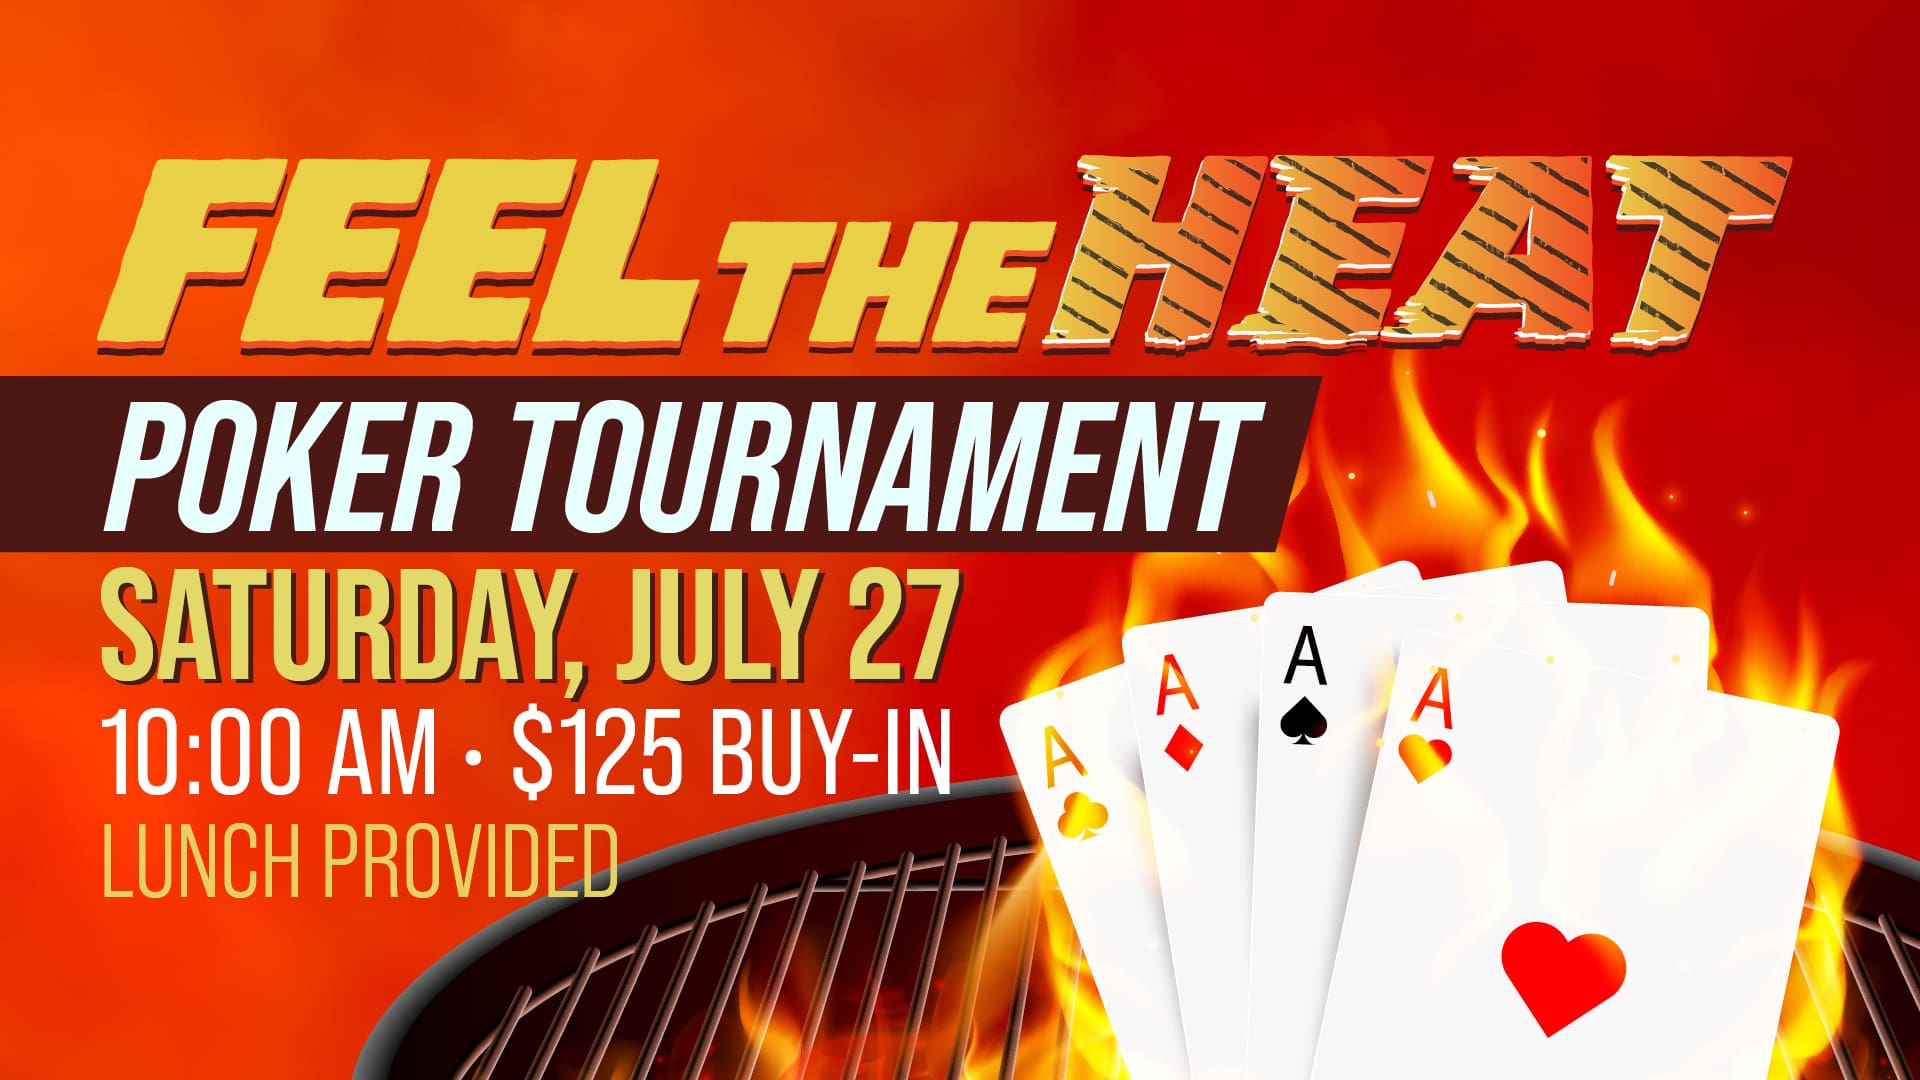 Feel The Heat Poker Tournament